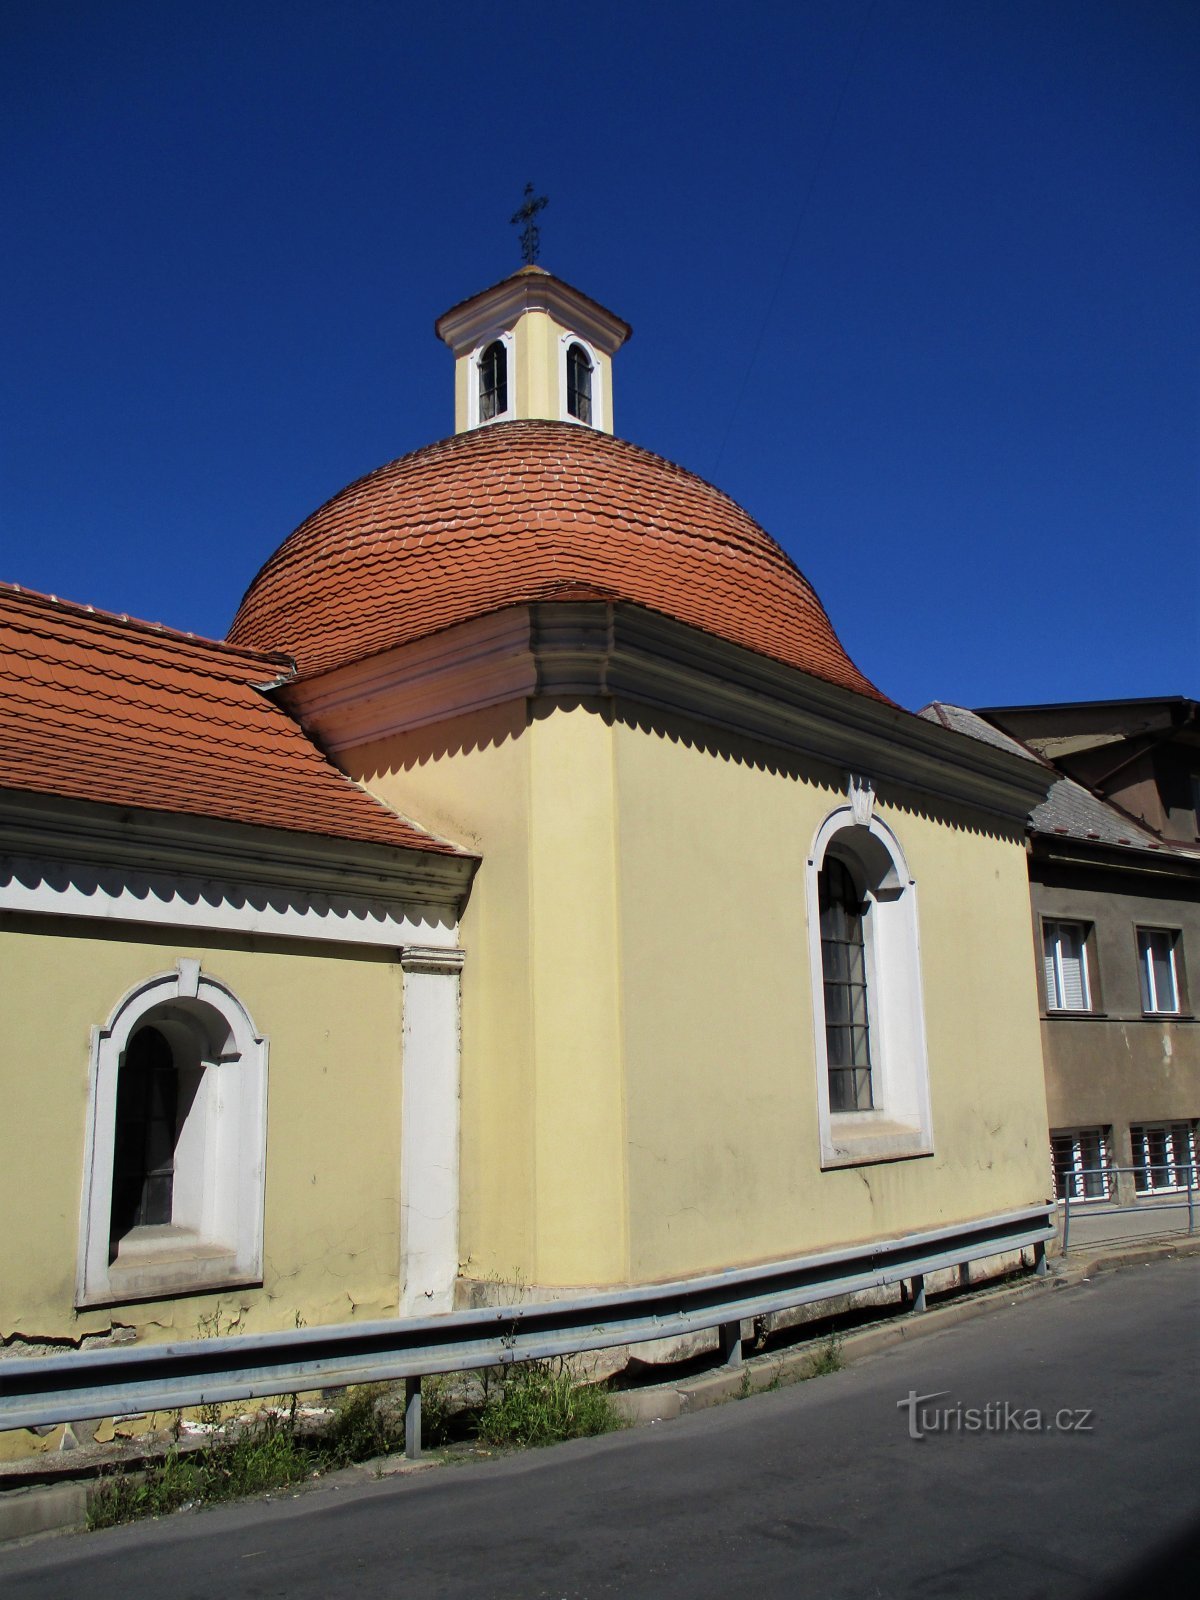 Capela Sf. Josefa (Roudnice nad Labem, 31.7.2020 iulie XNUMX)